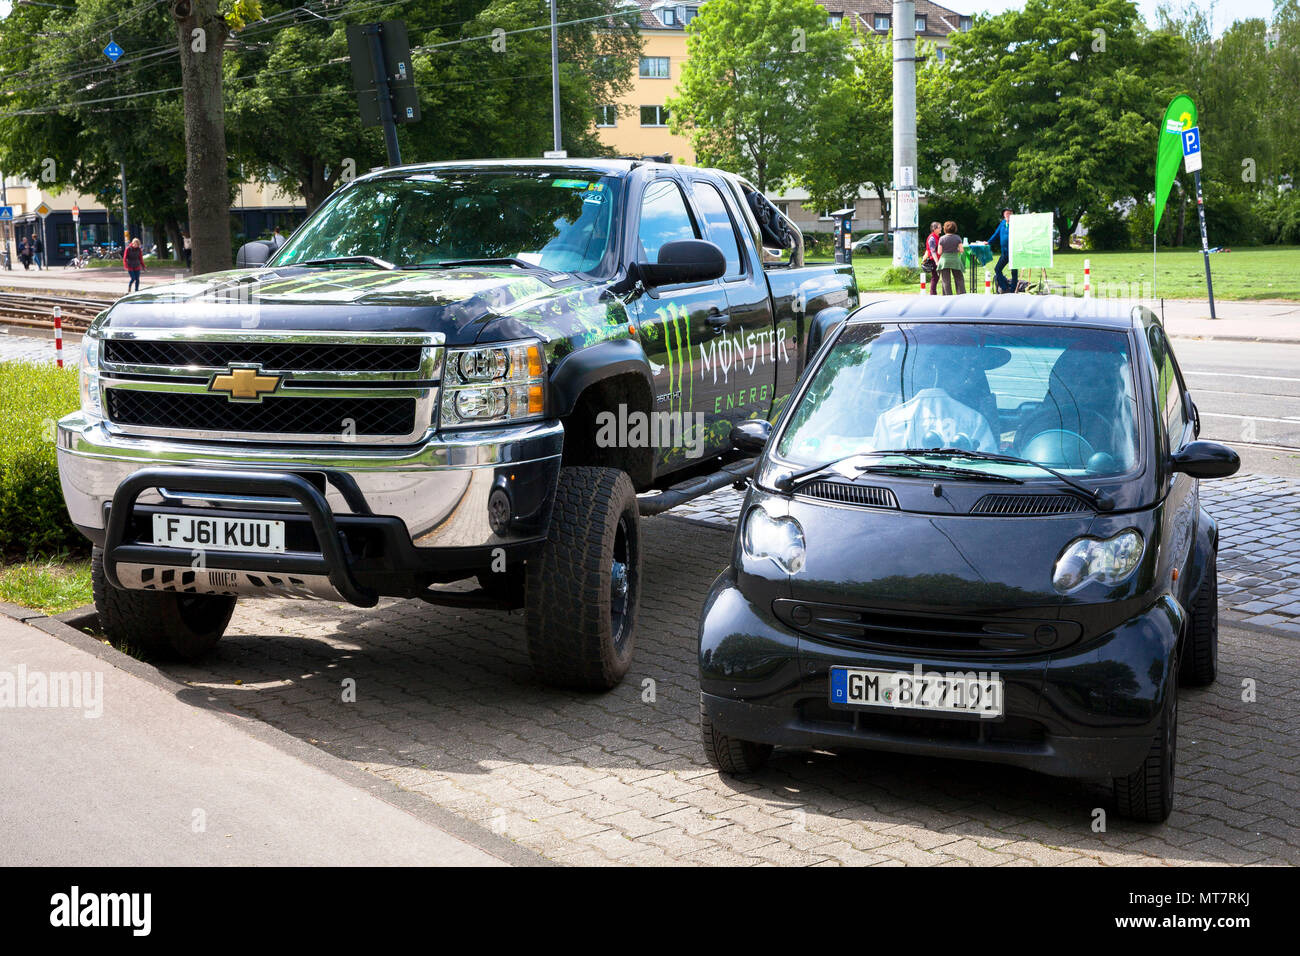 Smart parcheggiato a fianco di un grande Chevrolet Pick Up, Colonia, Germania. Smart parkt neben einem grossen Chevrolet Pick Up, Koeln, Deutschland. Foto Stock